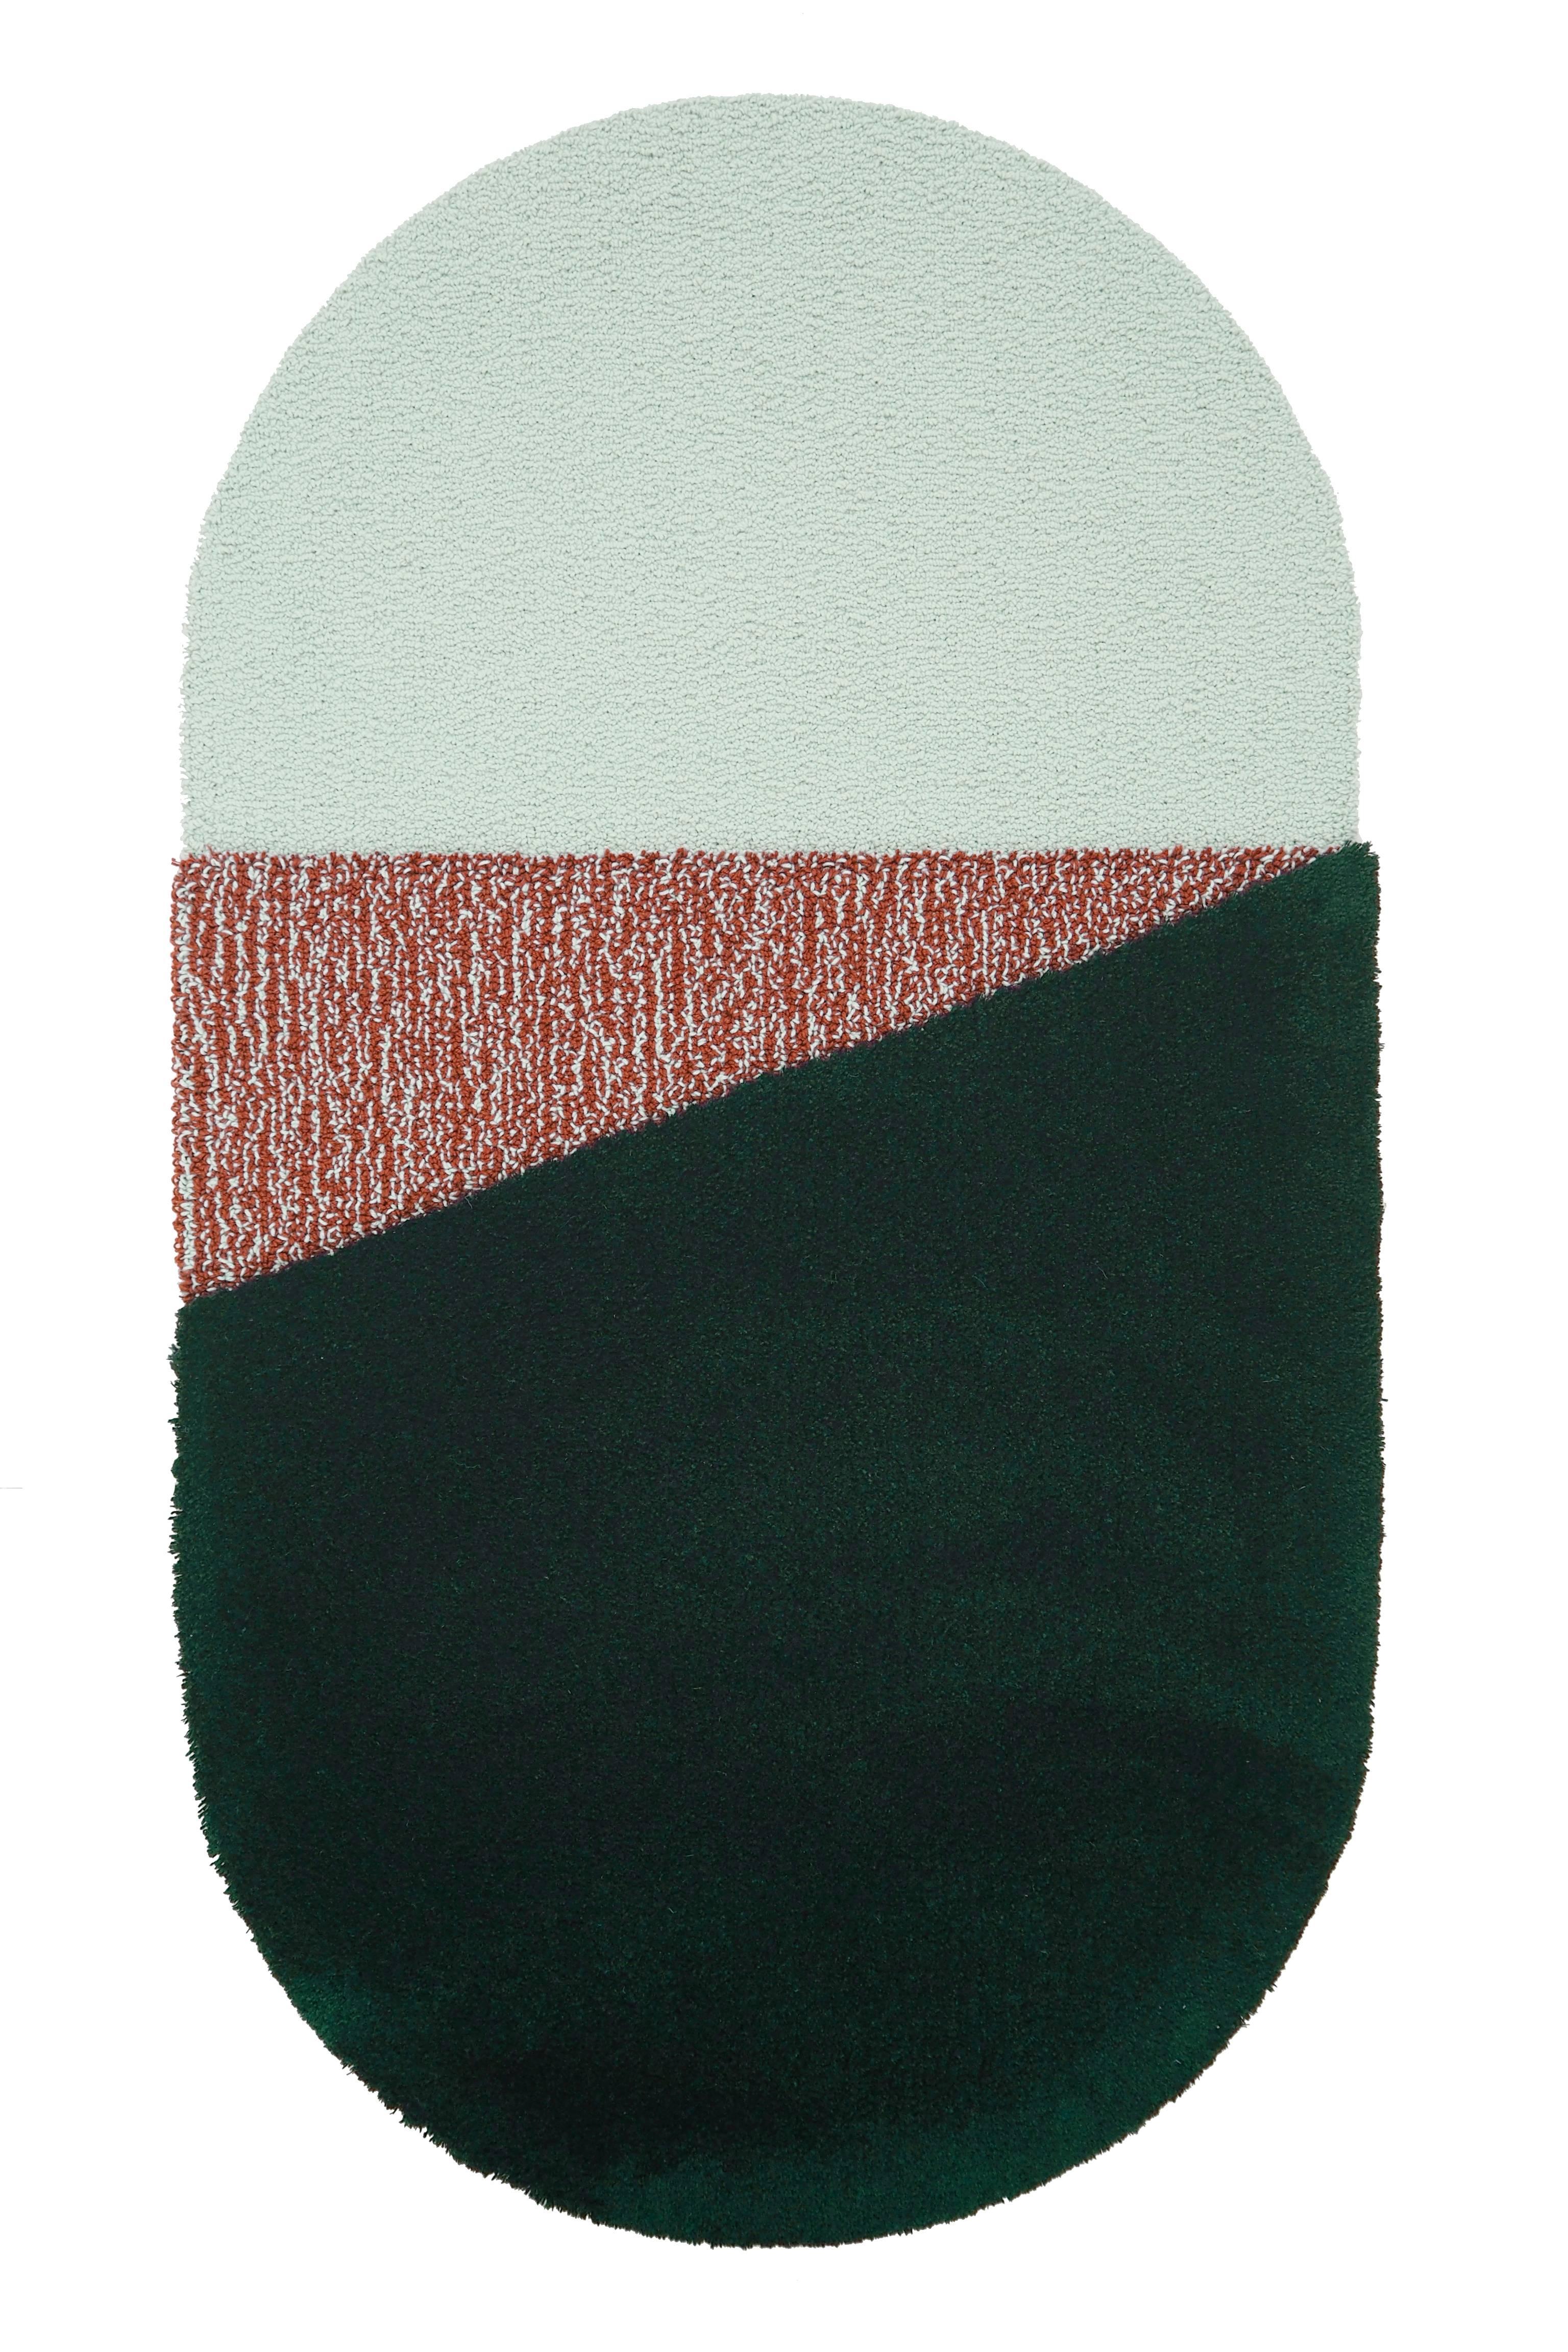 Contemporary Large Green Oci Rug Triptych by Seraina Lareida